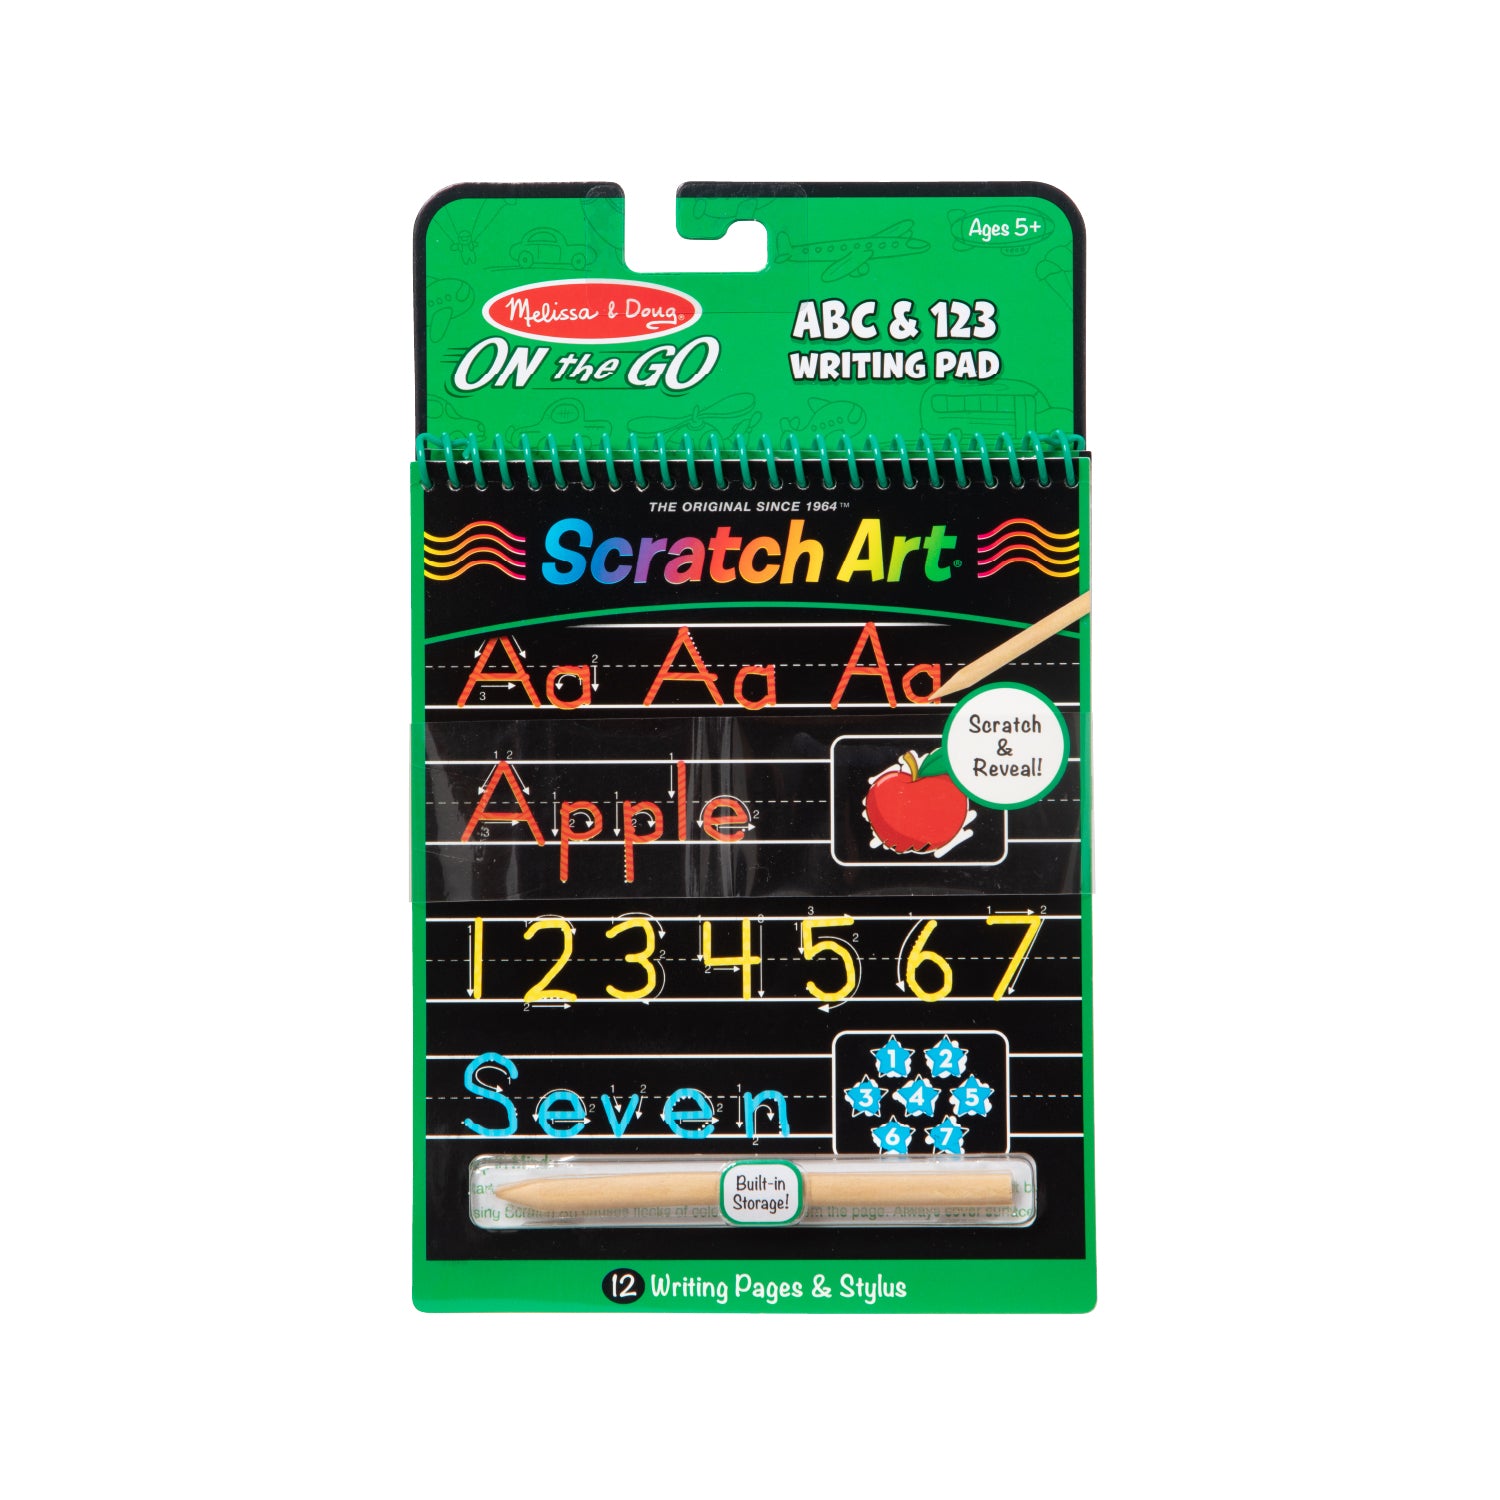 Scratch Art - ABC & 123